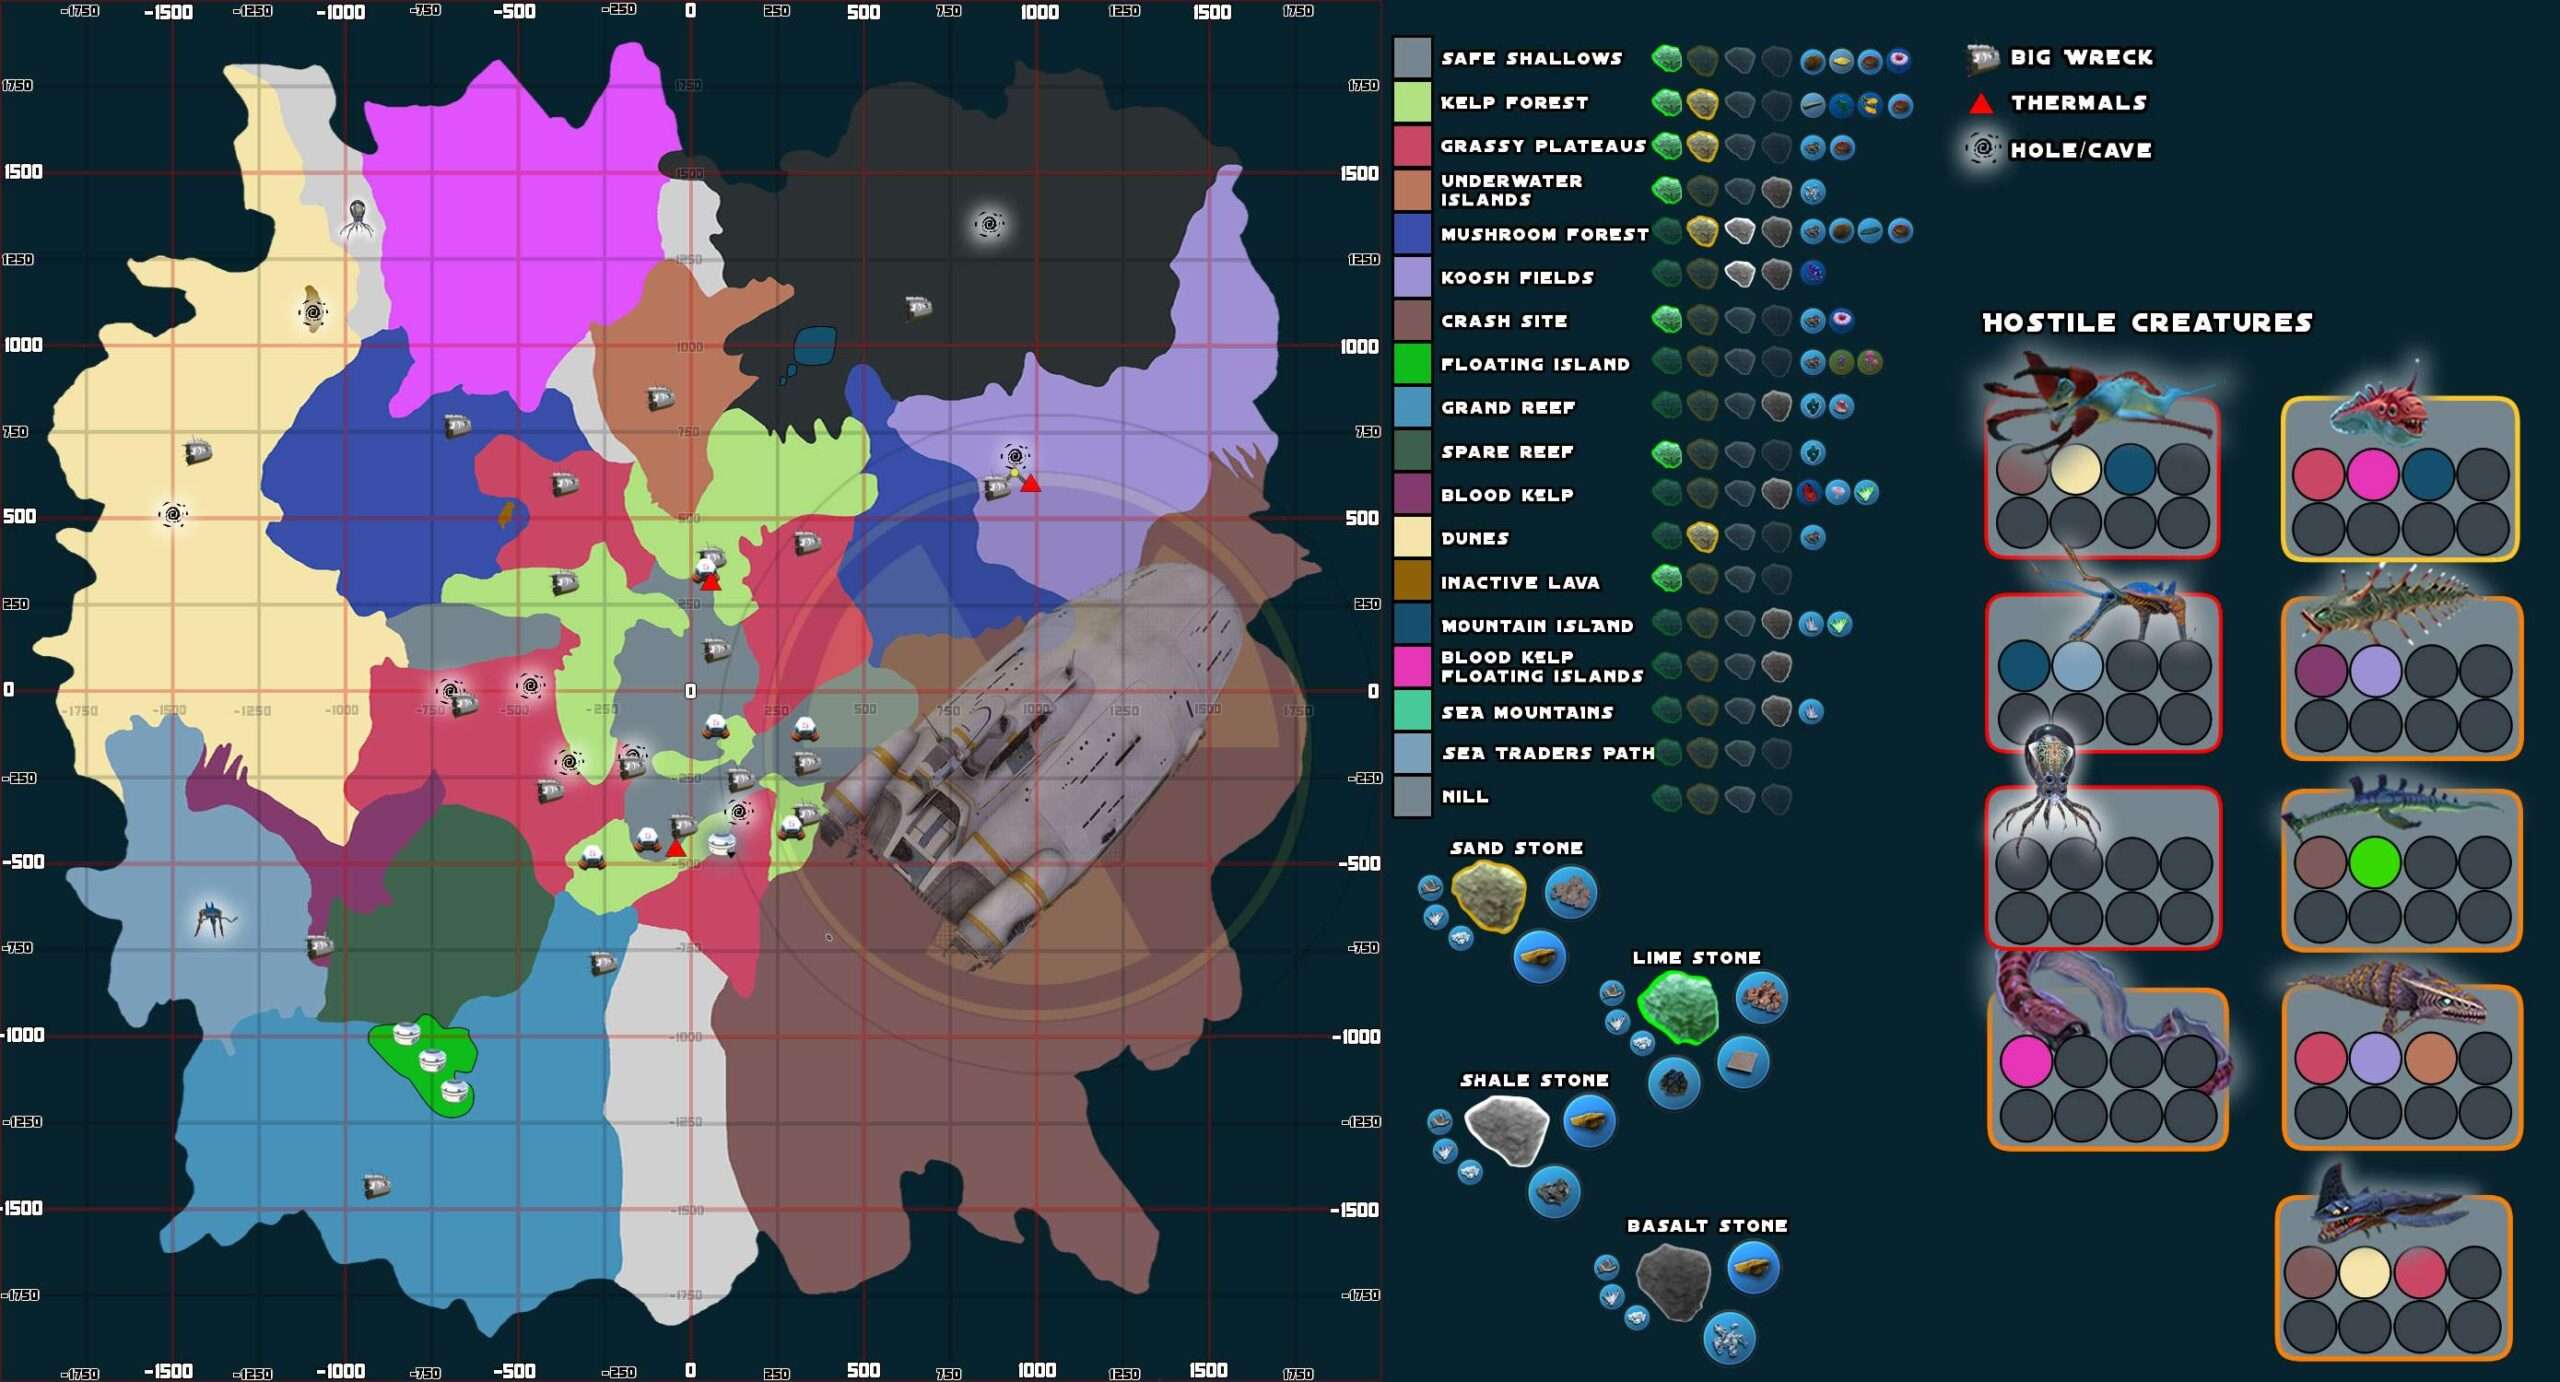 Subnautica Map (Resources and Hostile Creatures)